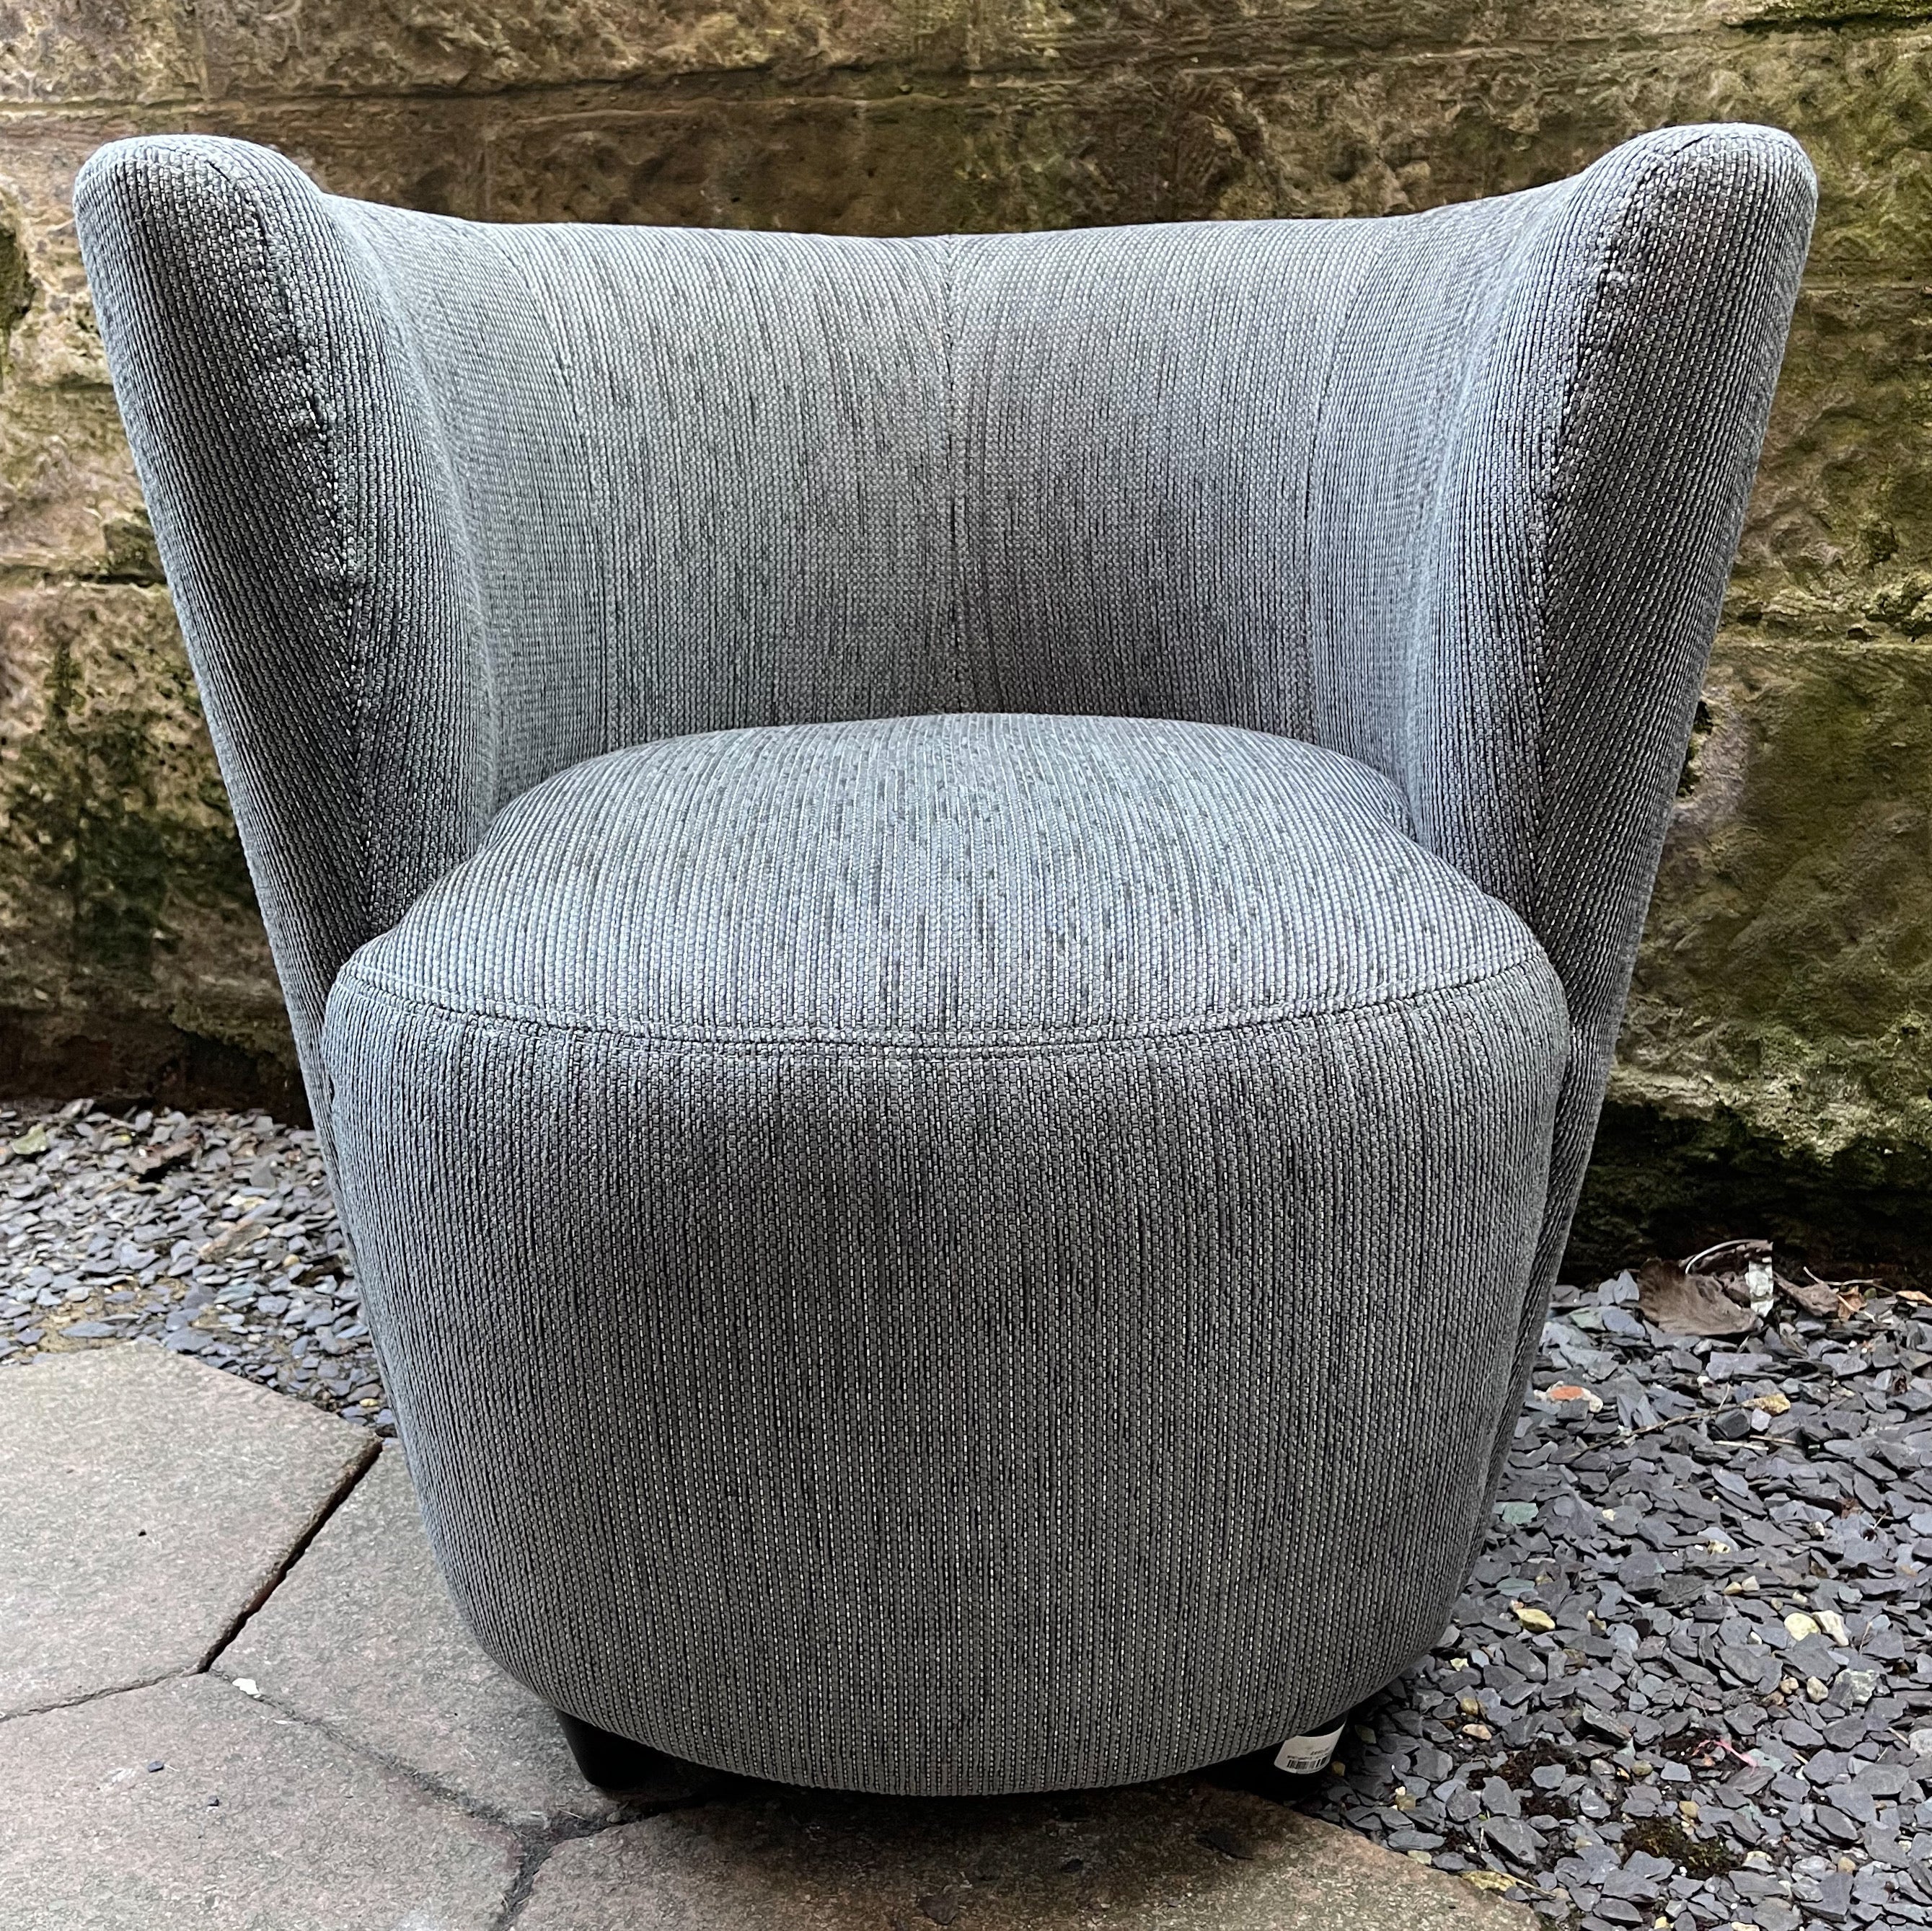 Grey Hugo Chair - last one in stock - The Nancy Smillie Shop - Art, Jewellery & Designer Gifts Glasgow